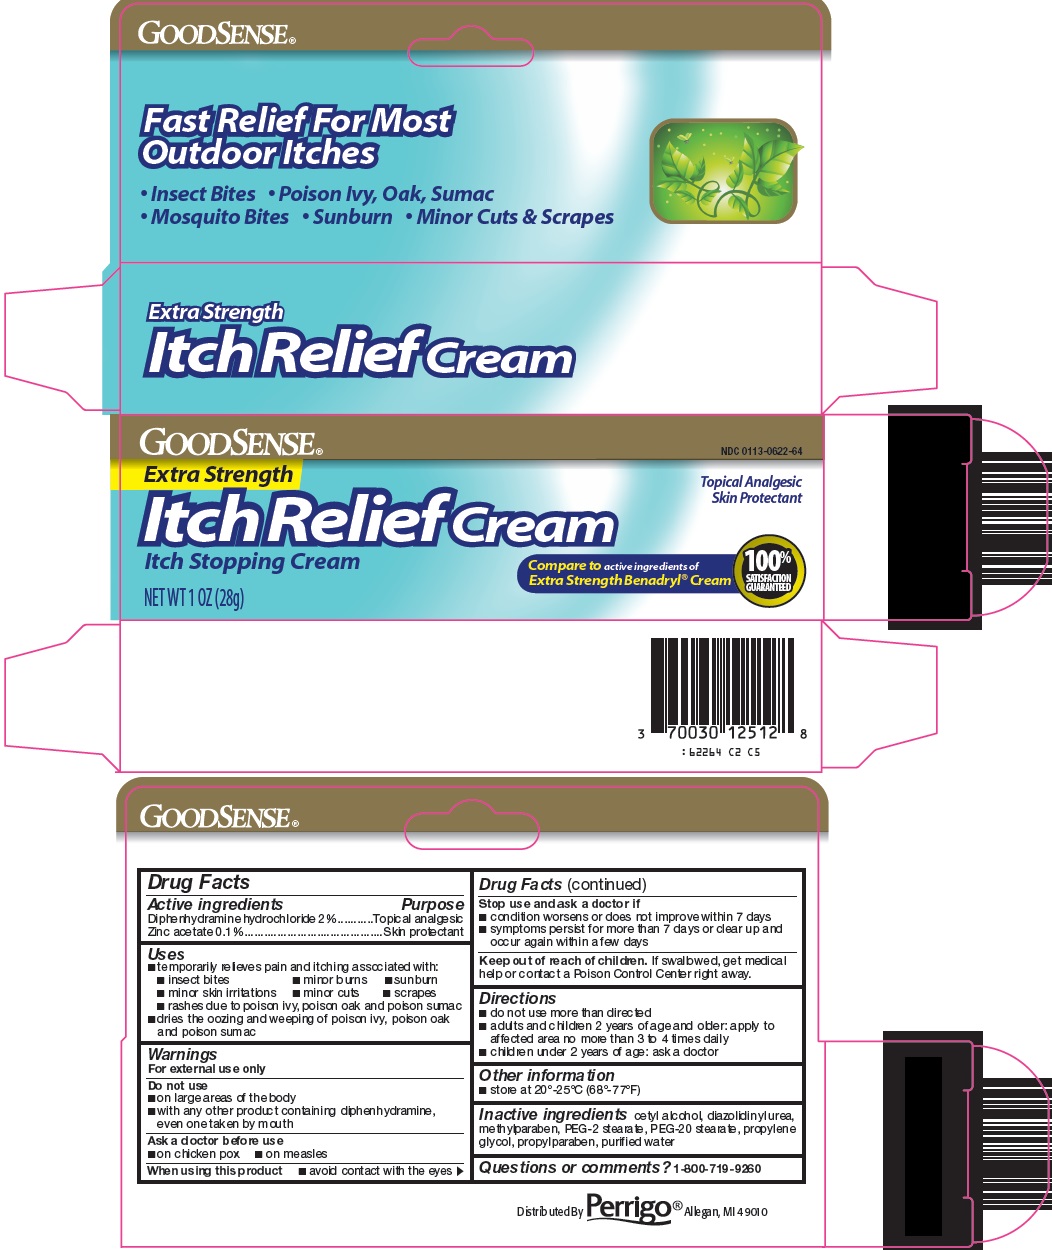 GoodSense Itch Relief Cream image